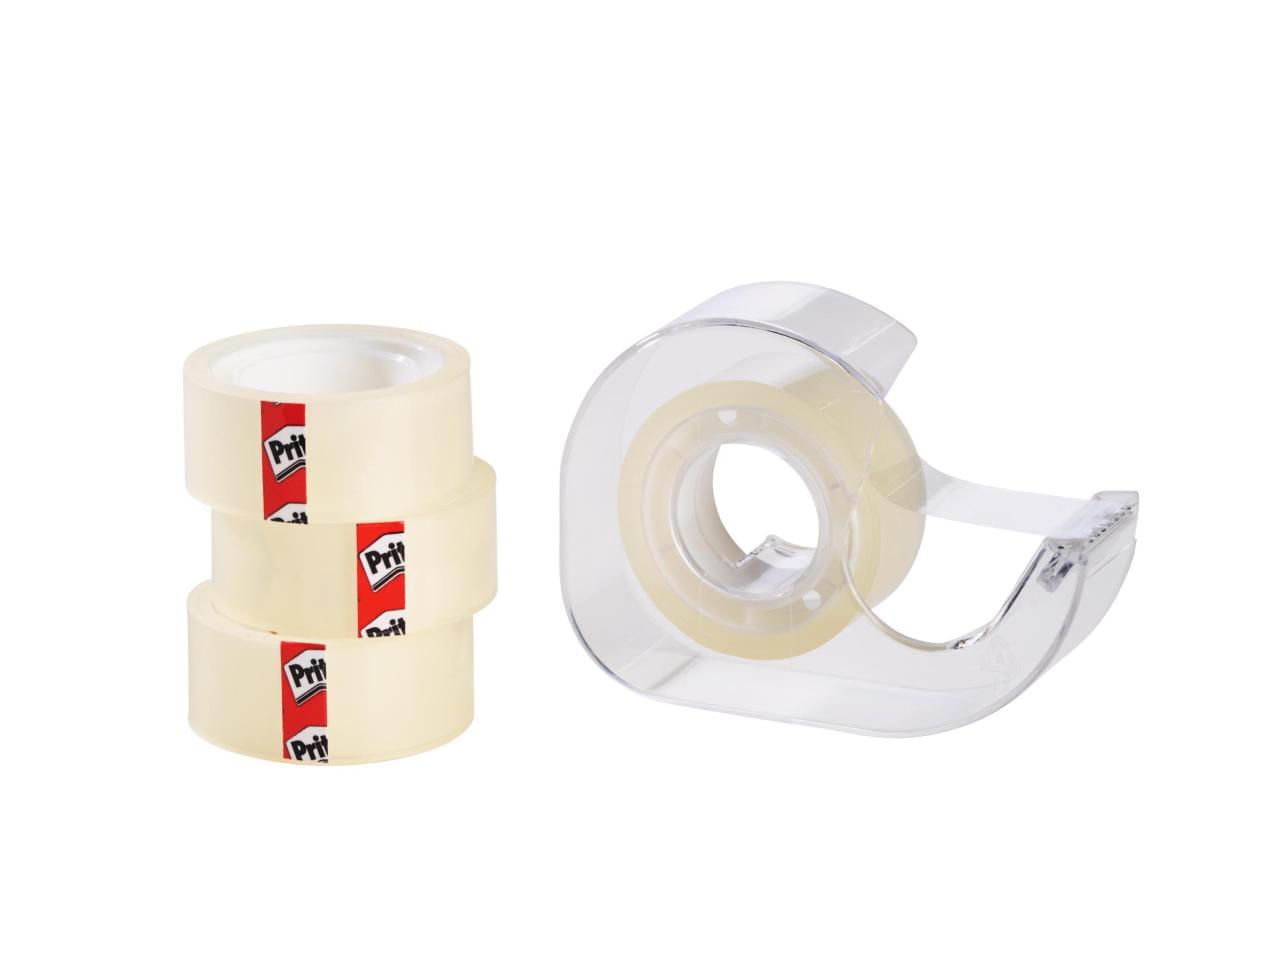 Glue or Self-Adhesive Tape Set